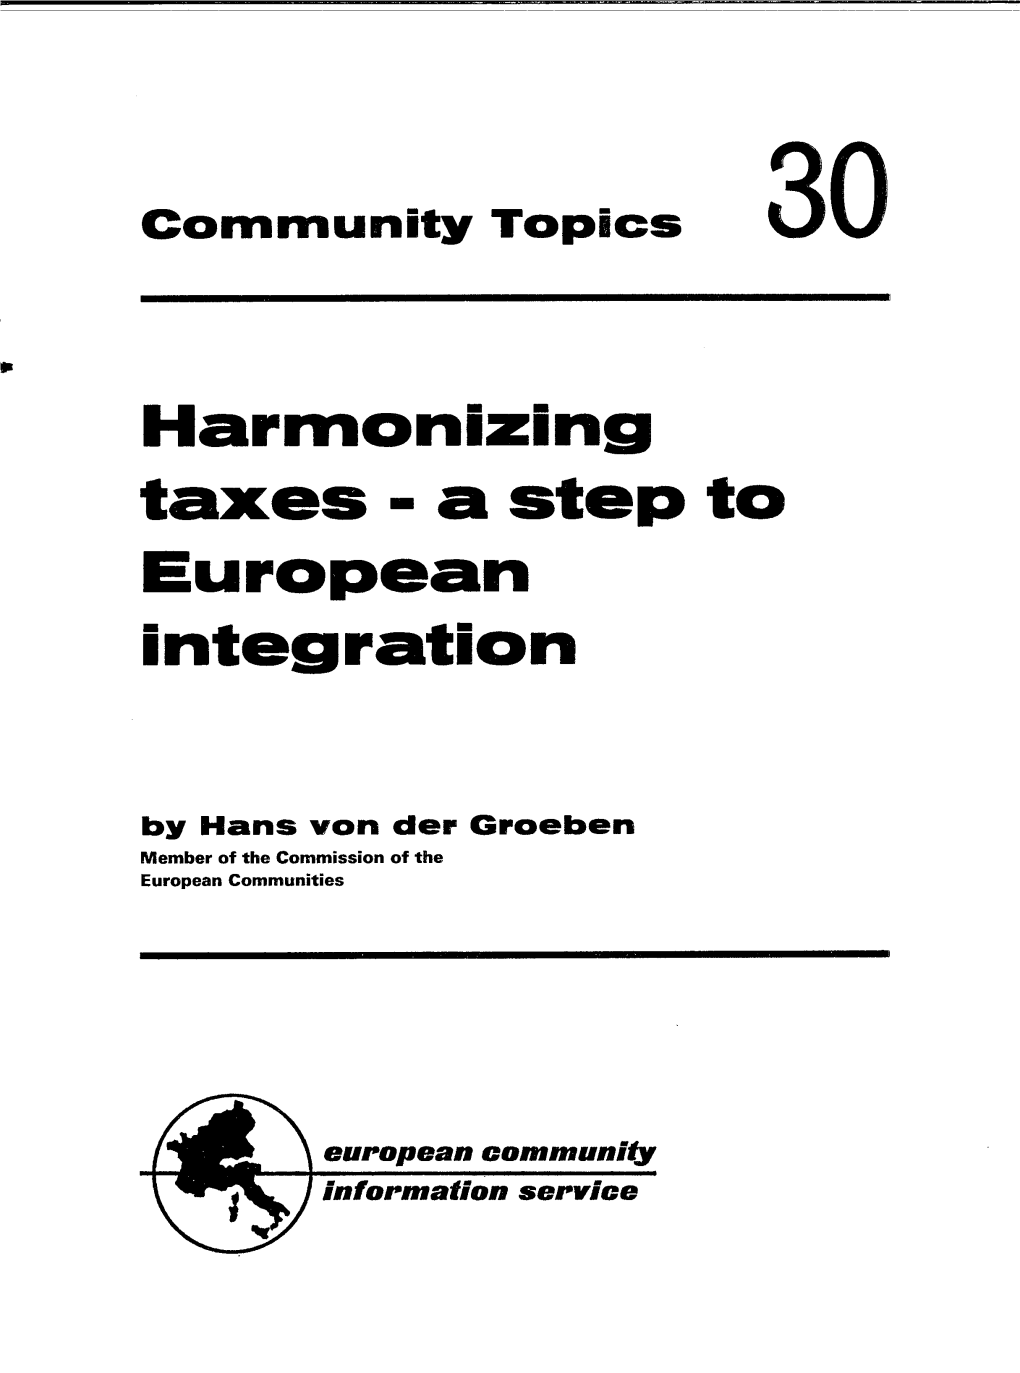 Harmonizing Taxes - a Step to European Integration